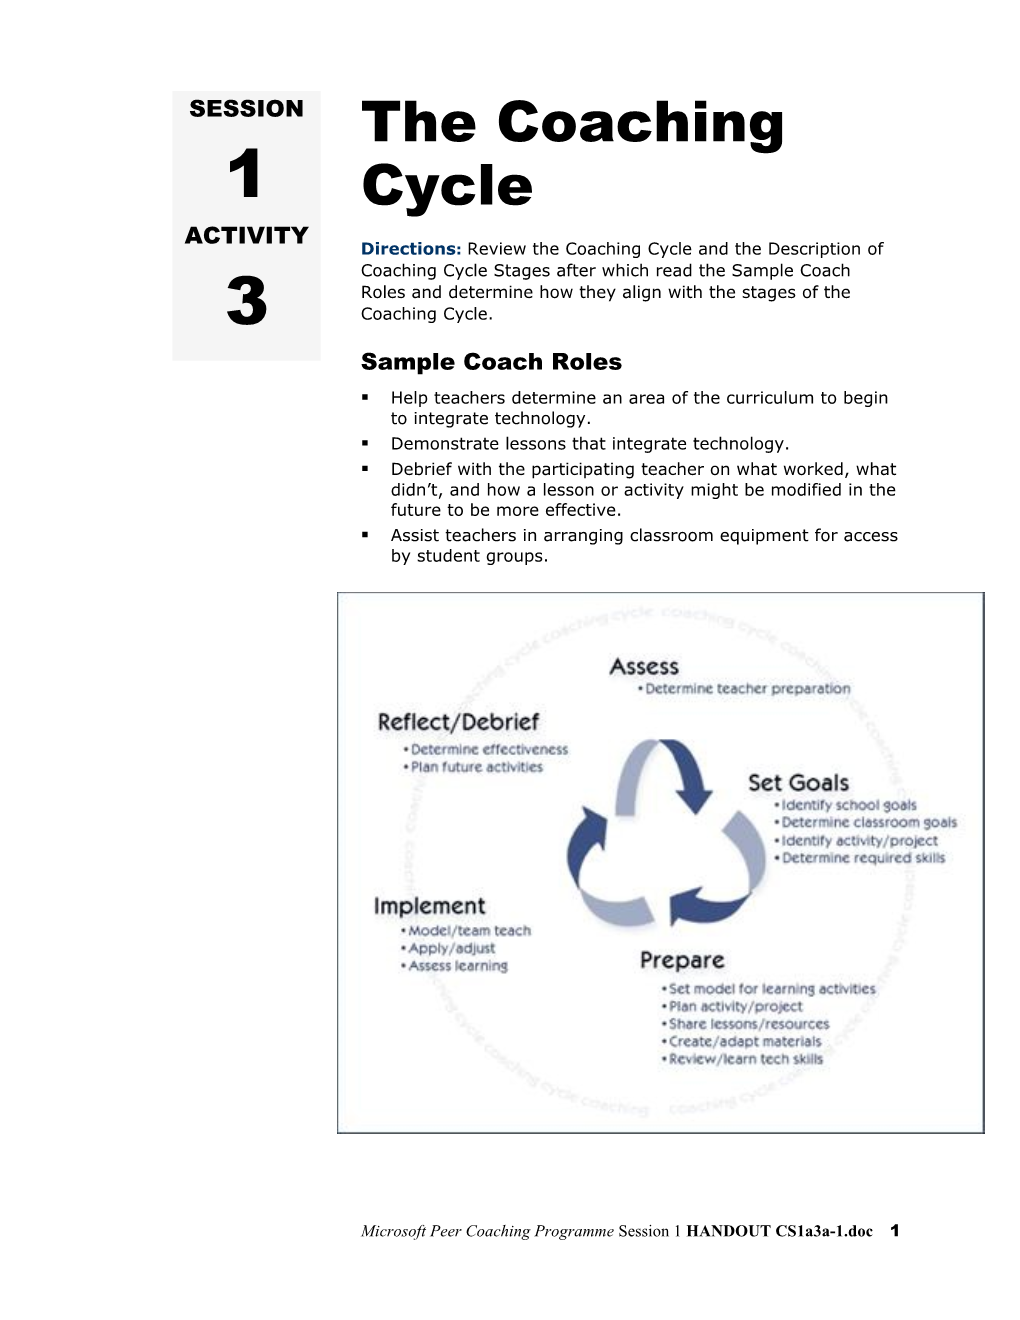 The Coaching Cycle